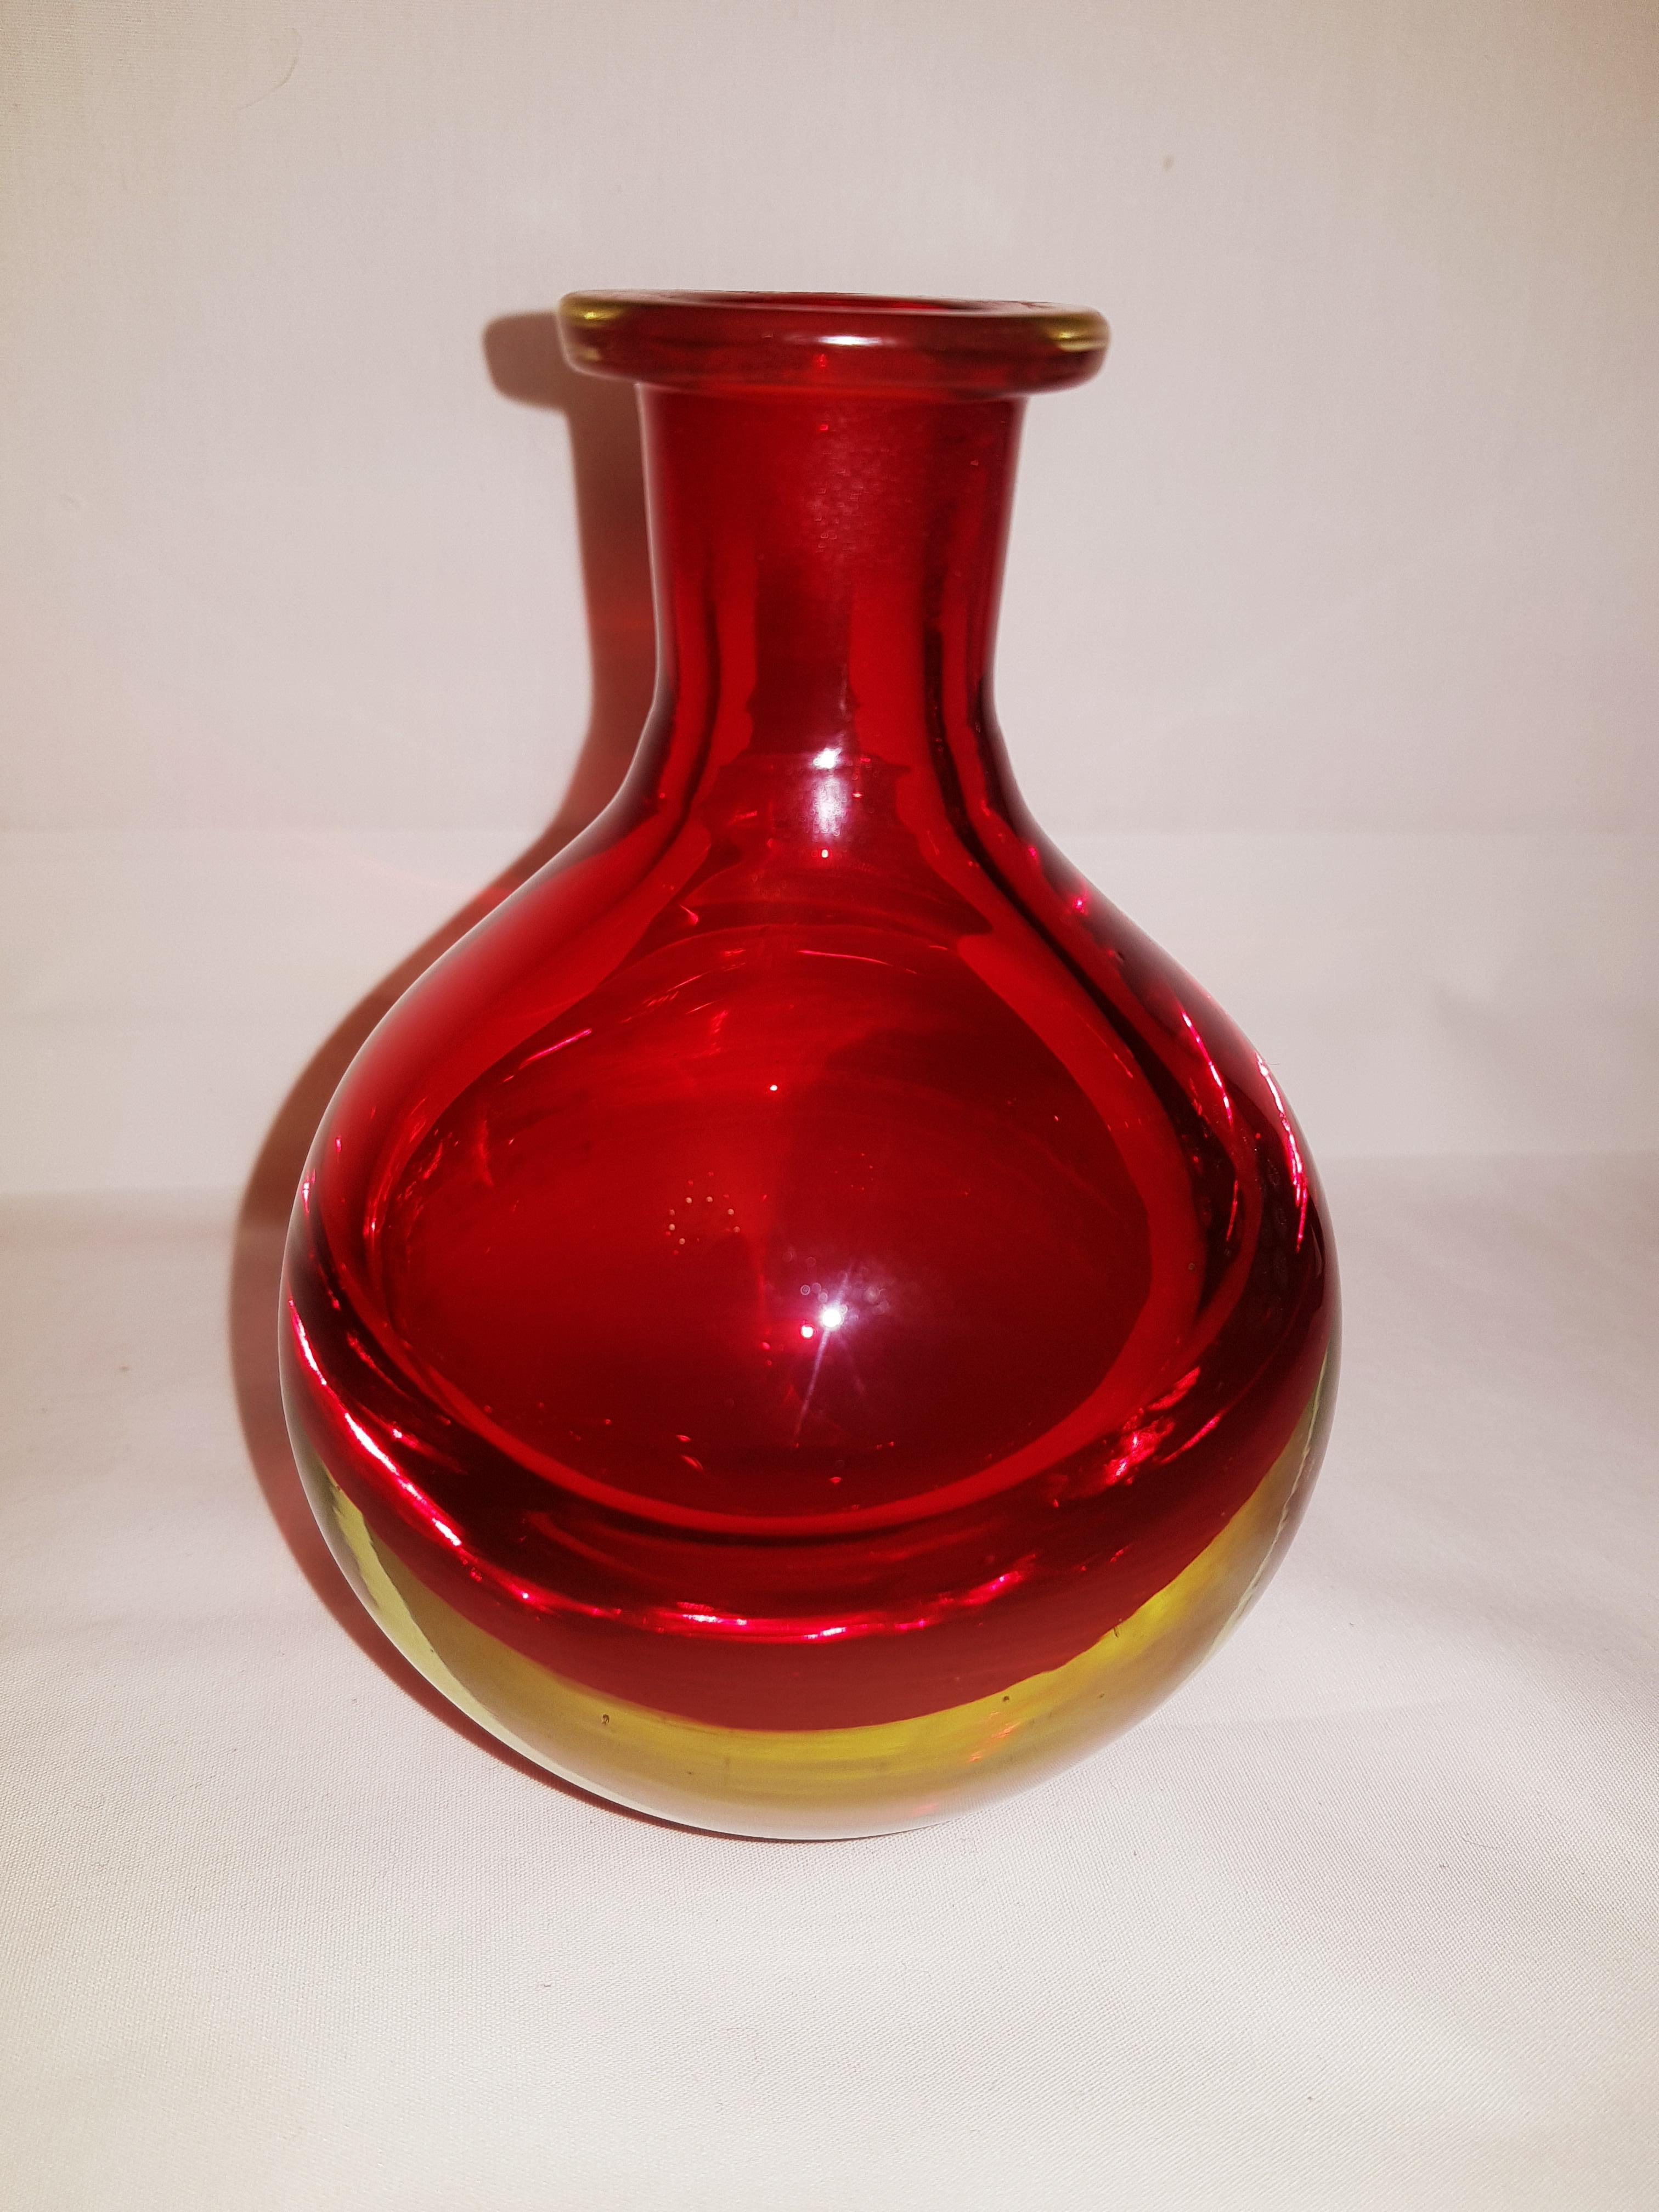 Beautiful murano glass uranium somerso vase, red, and uranium, from Cendese by Antonio Da Ros years 1950 brilliant condition.